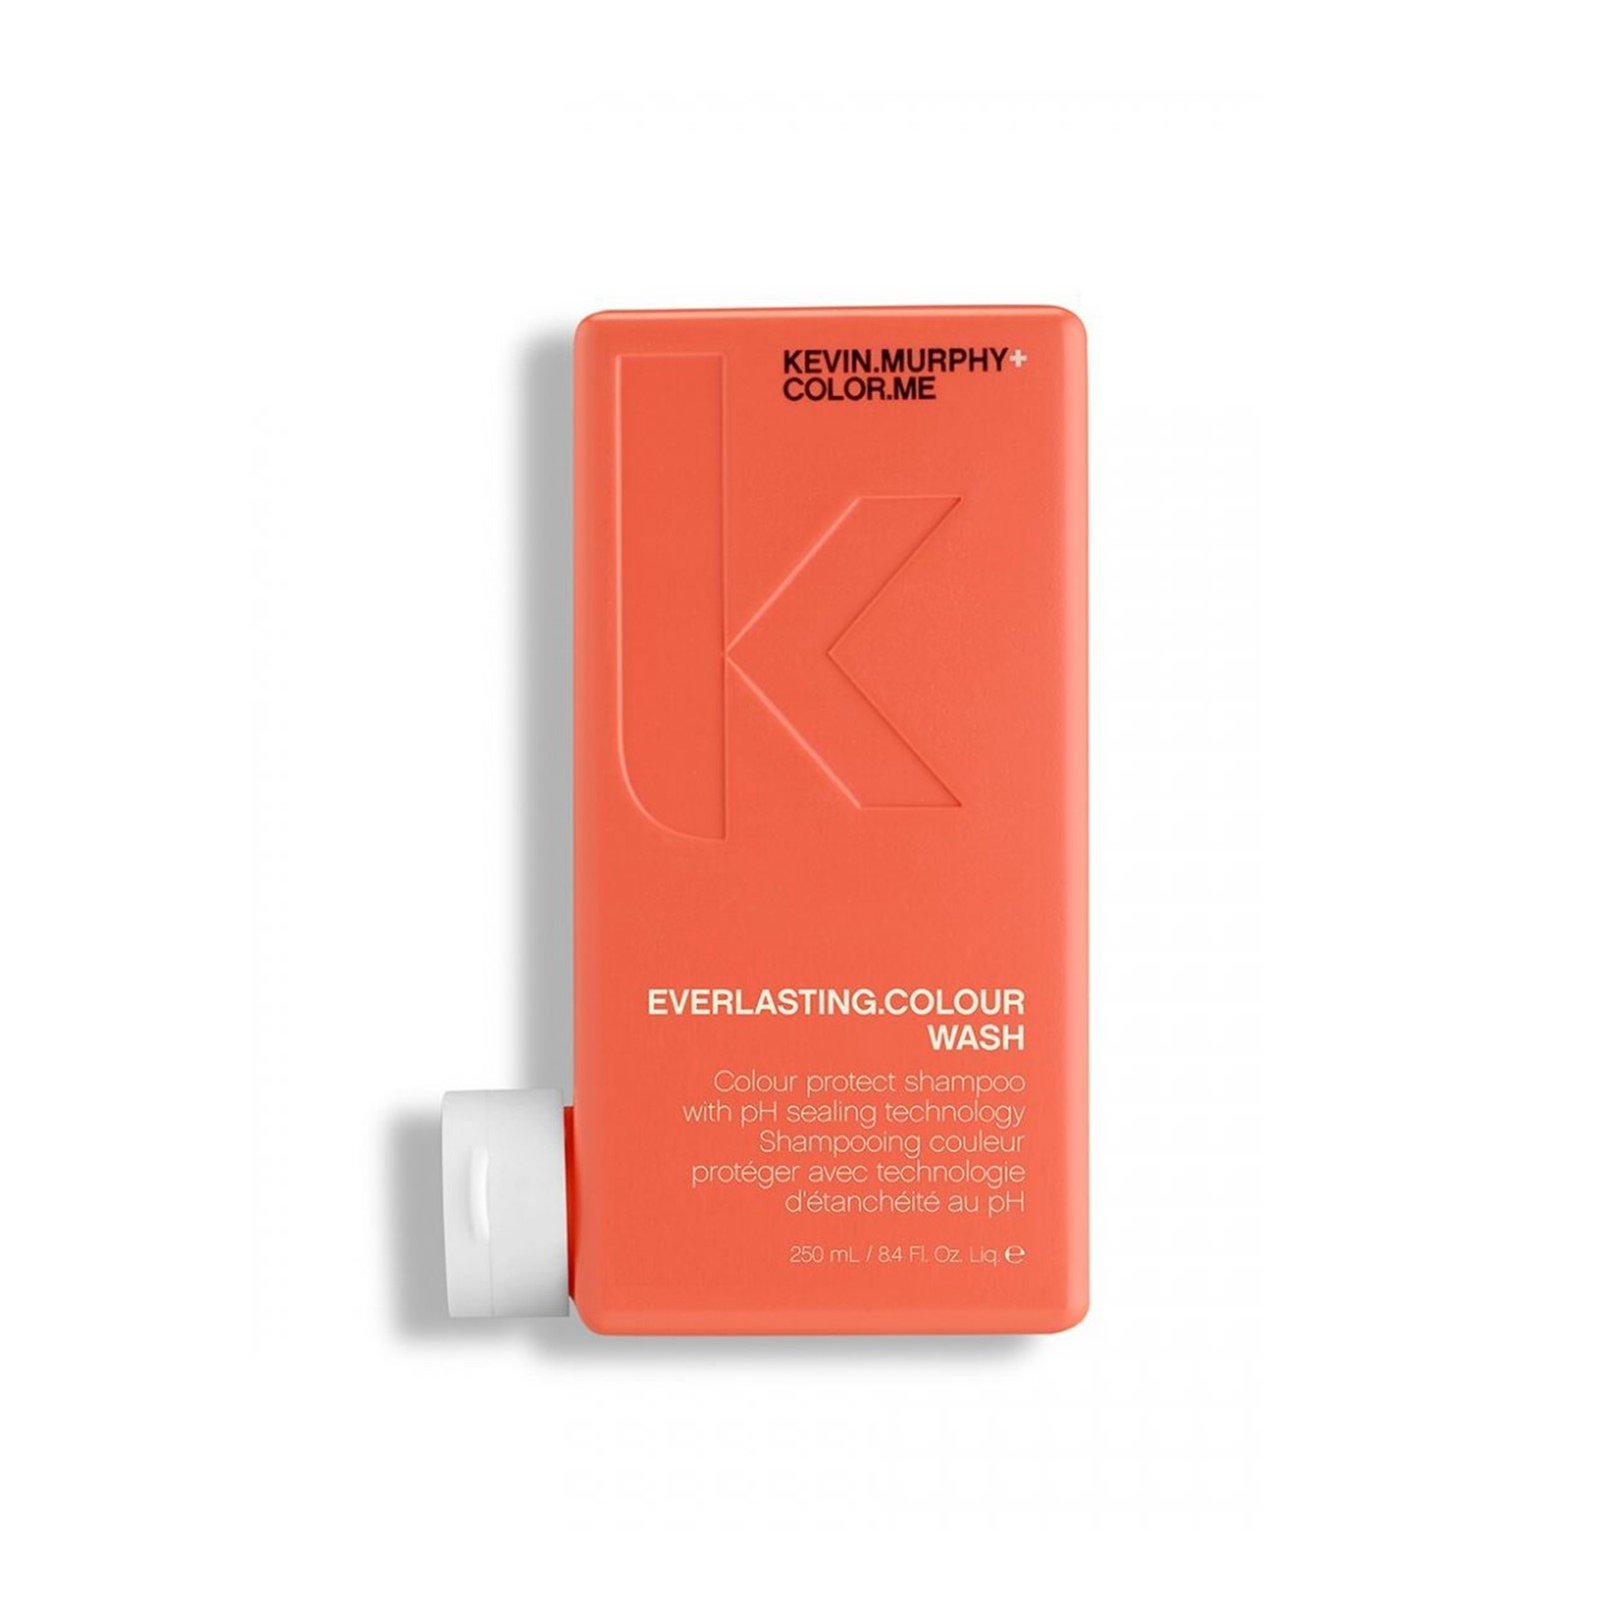 Kevin Murphy Everlasting Colour Wash Shampoo 250ml (8.4 fl oz)